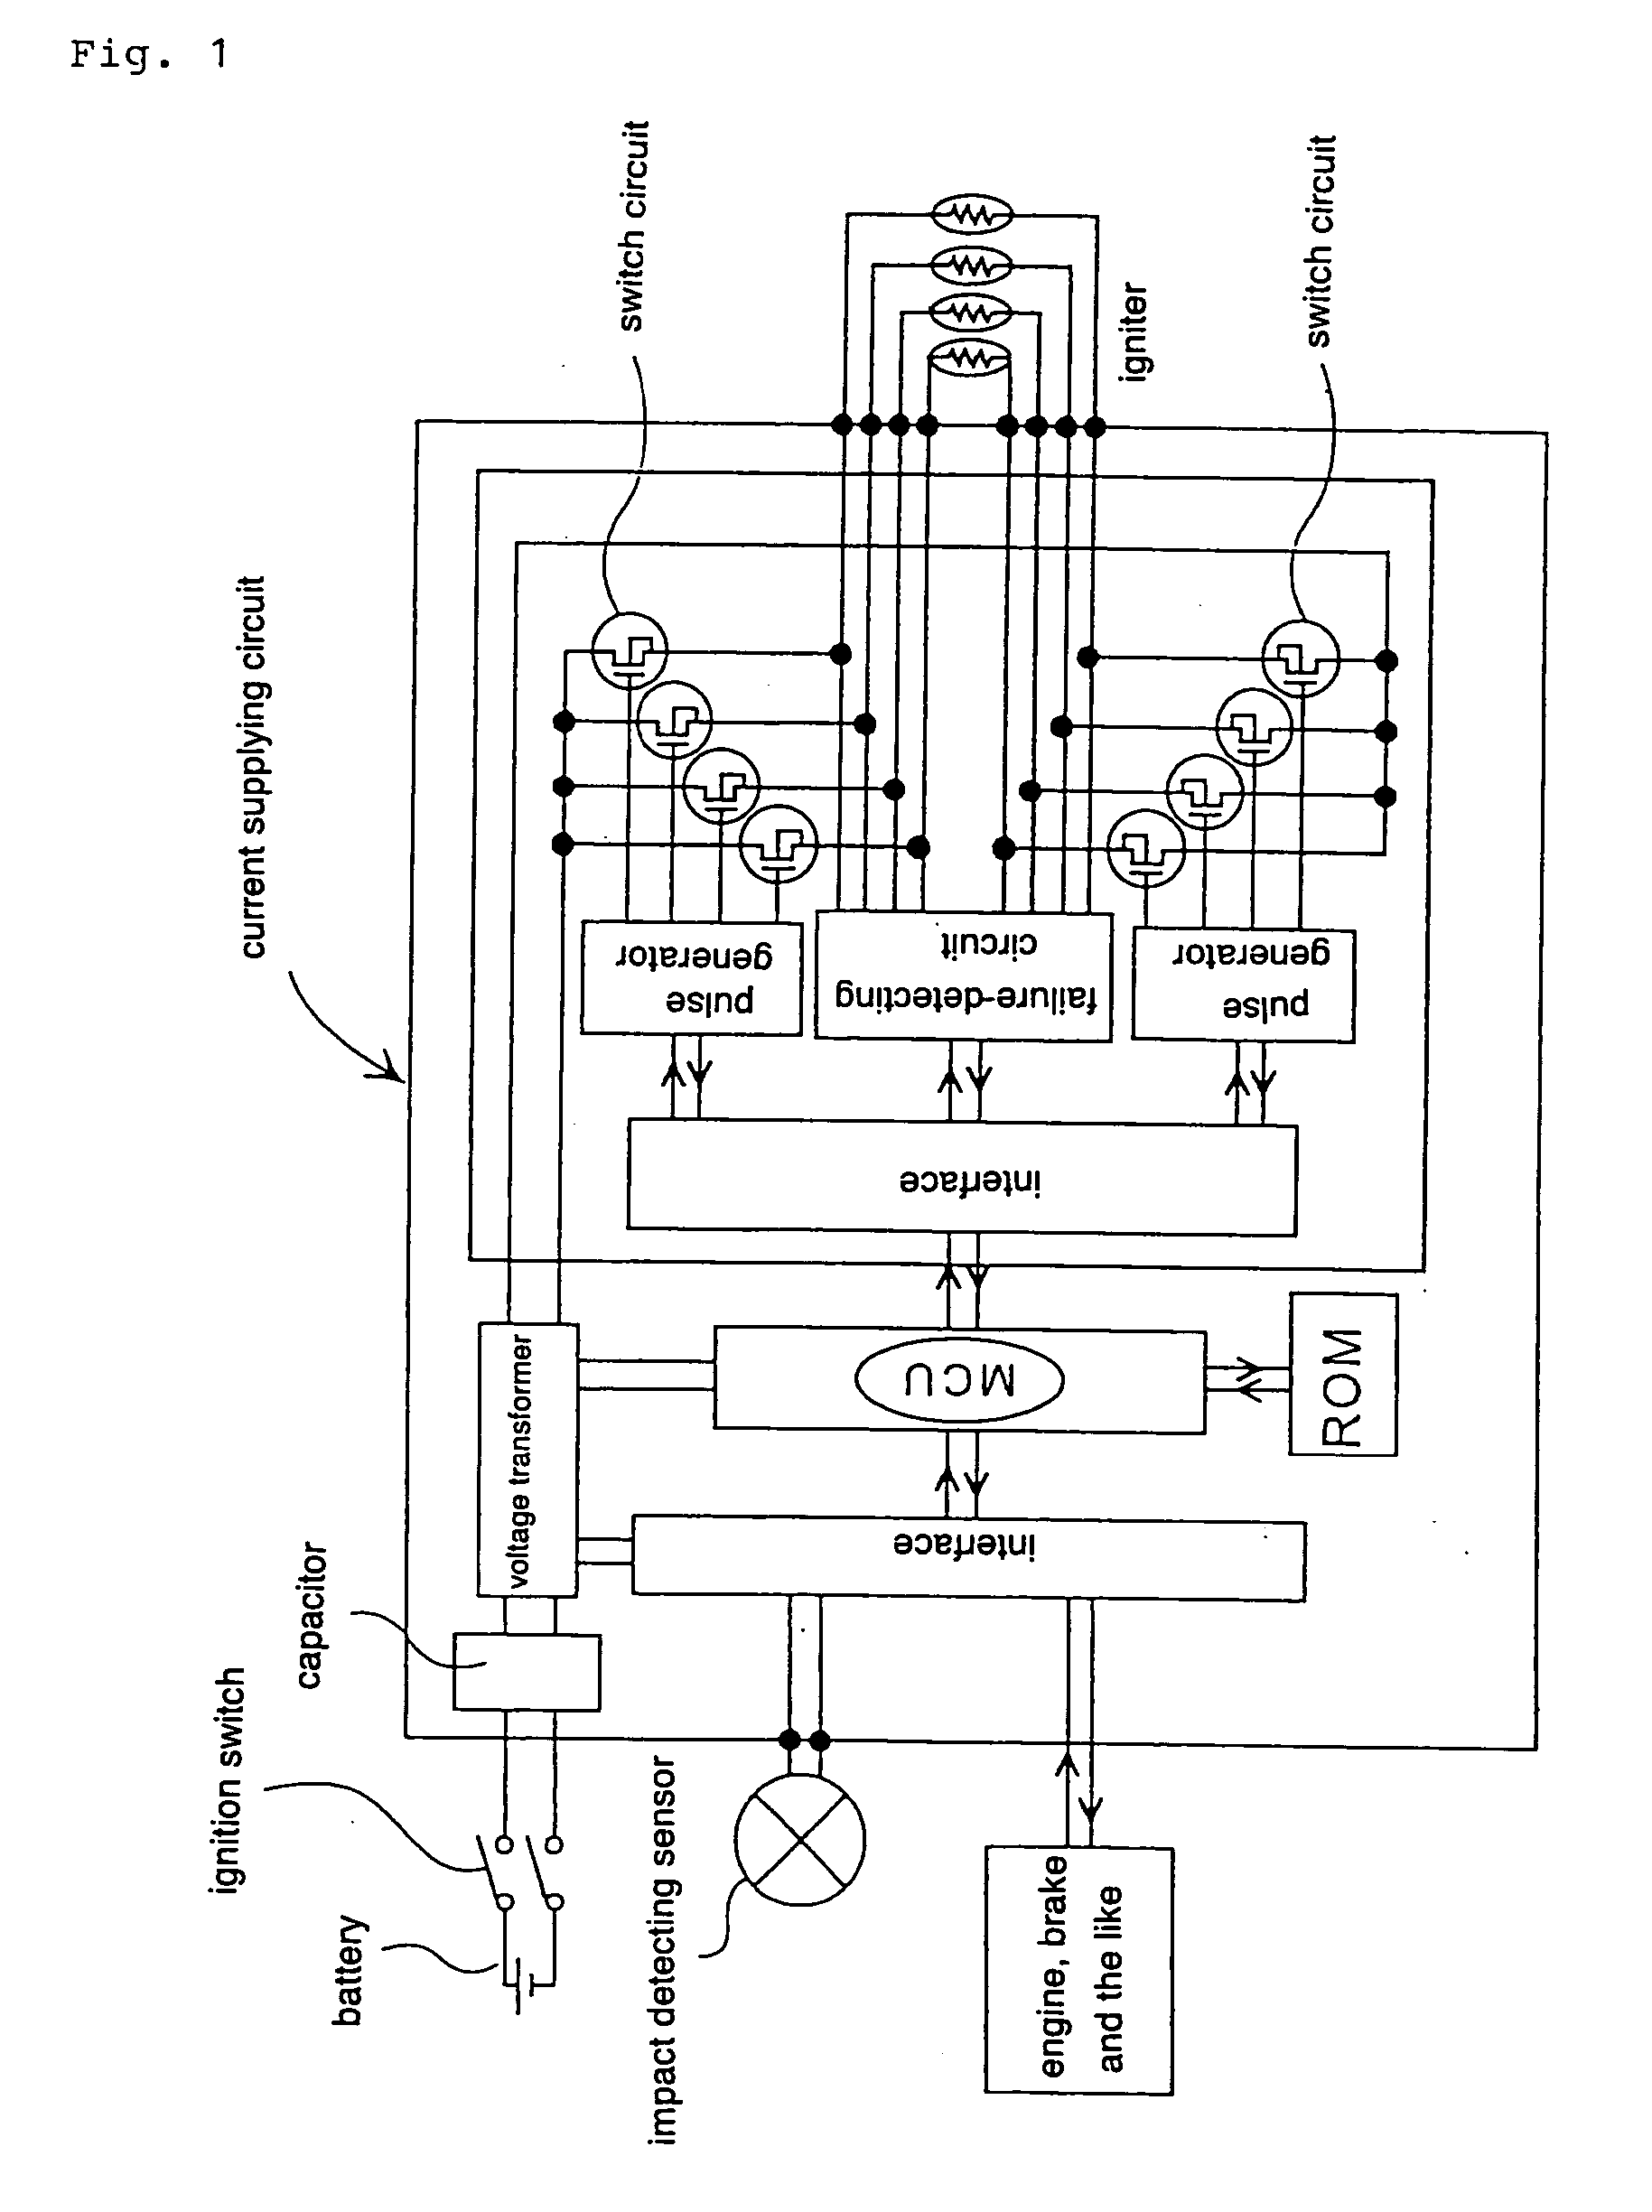 Current supplying circuit